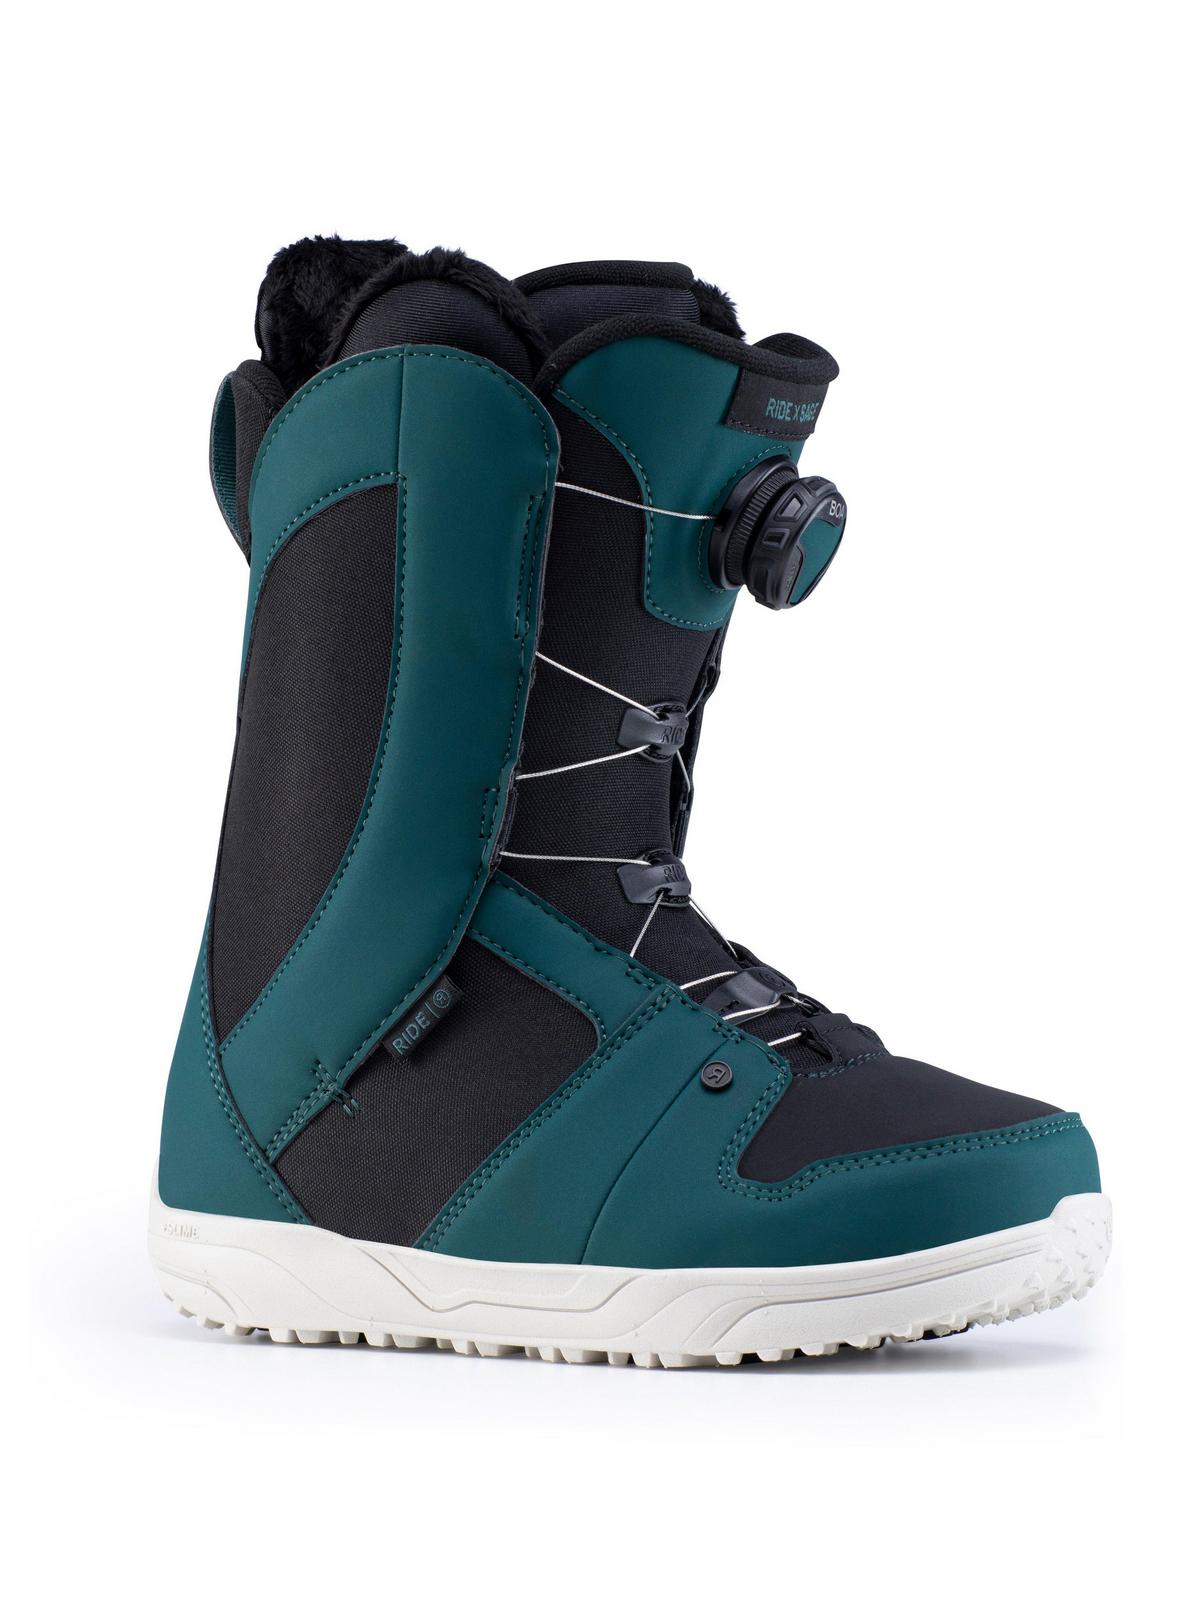 Sage Snowboard Boots | RIDE Snowboards